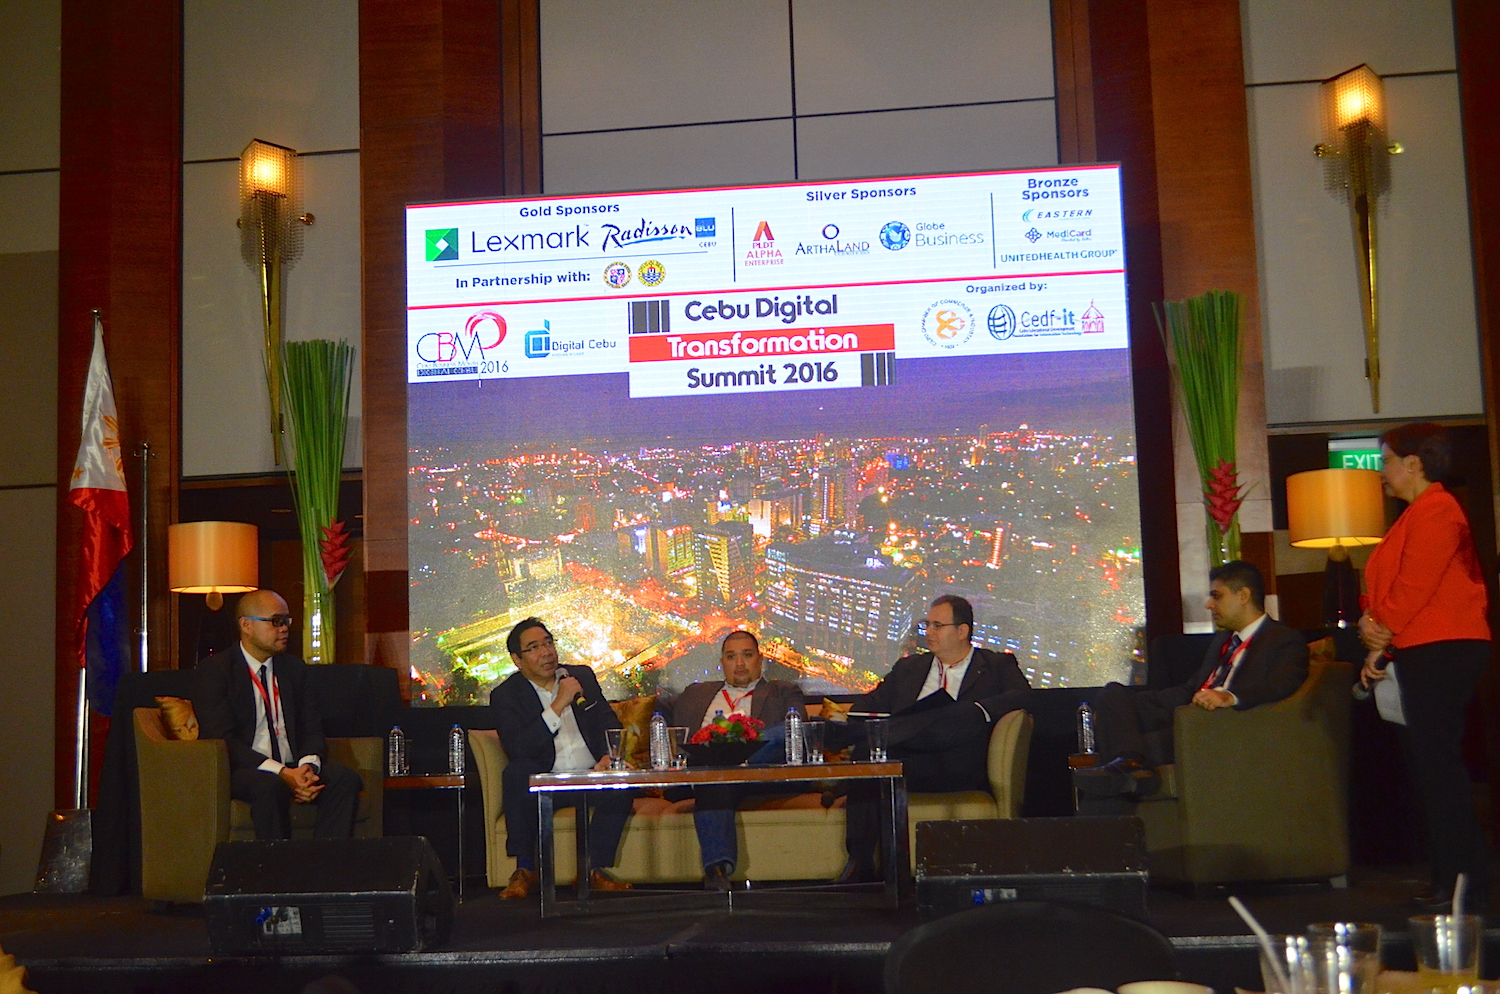 cebu digital transformation  summit 2016 panelists